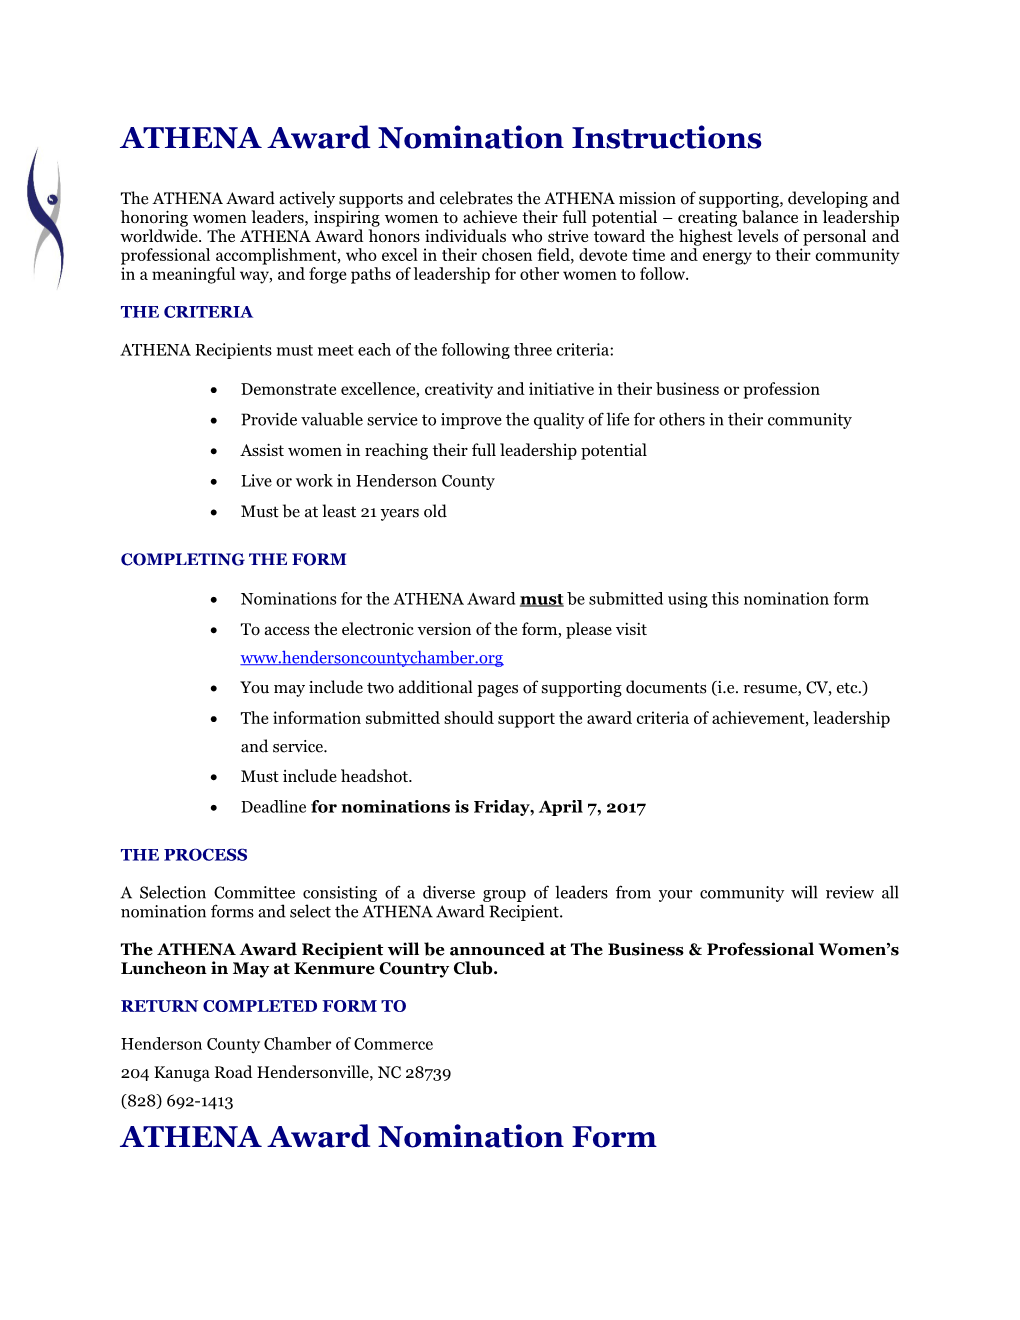 ATHENA Award Nomination Form (Page 1 of 3)